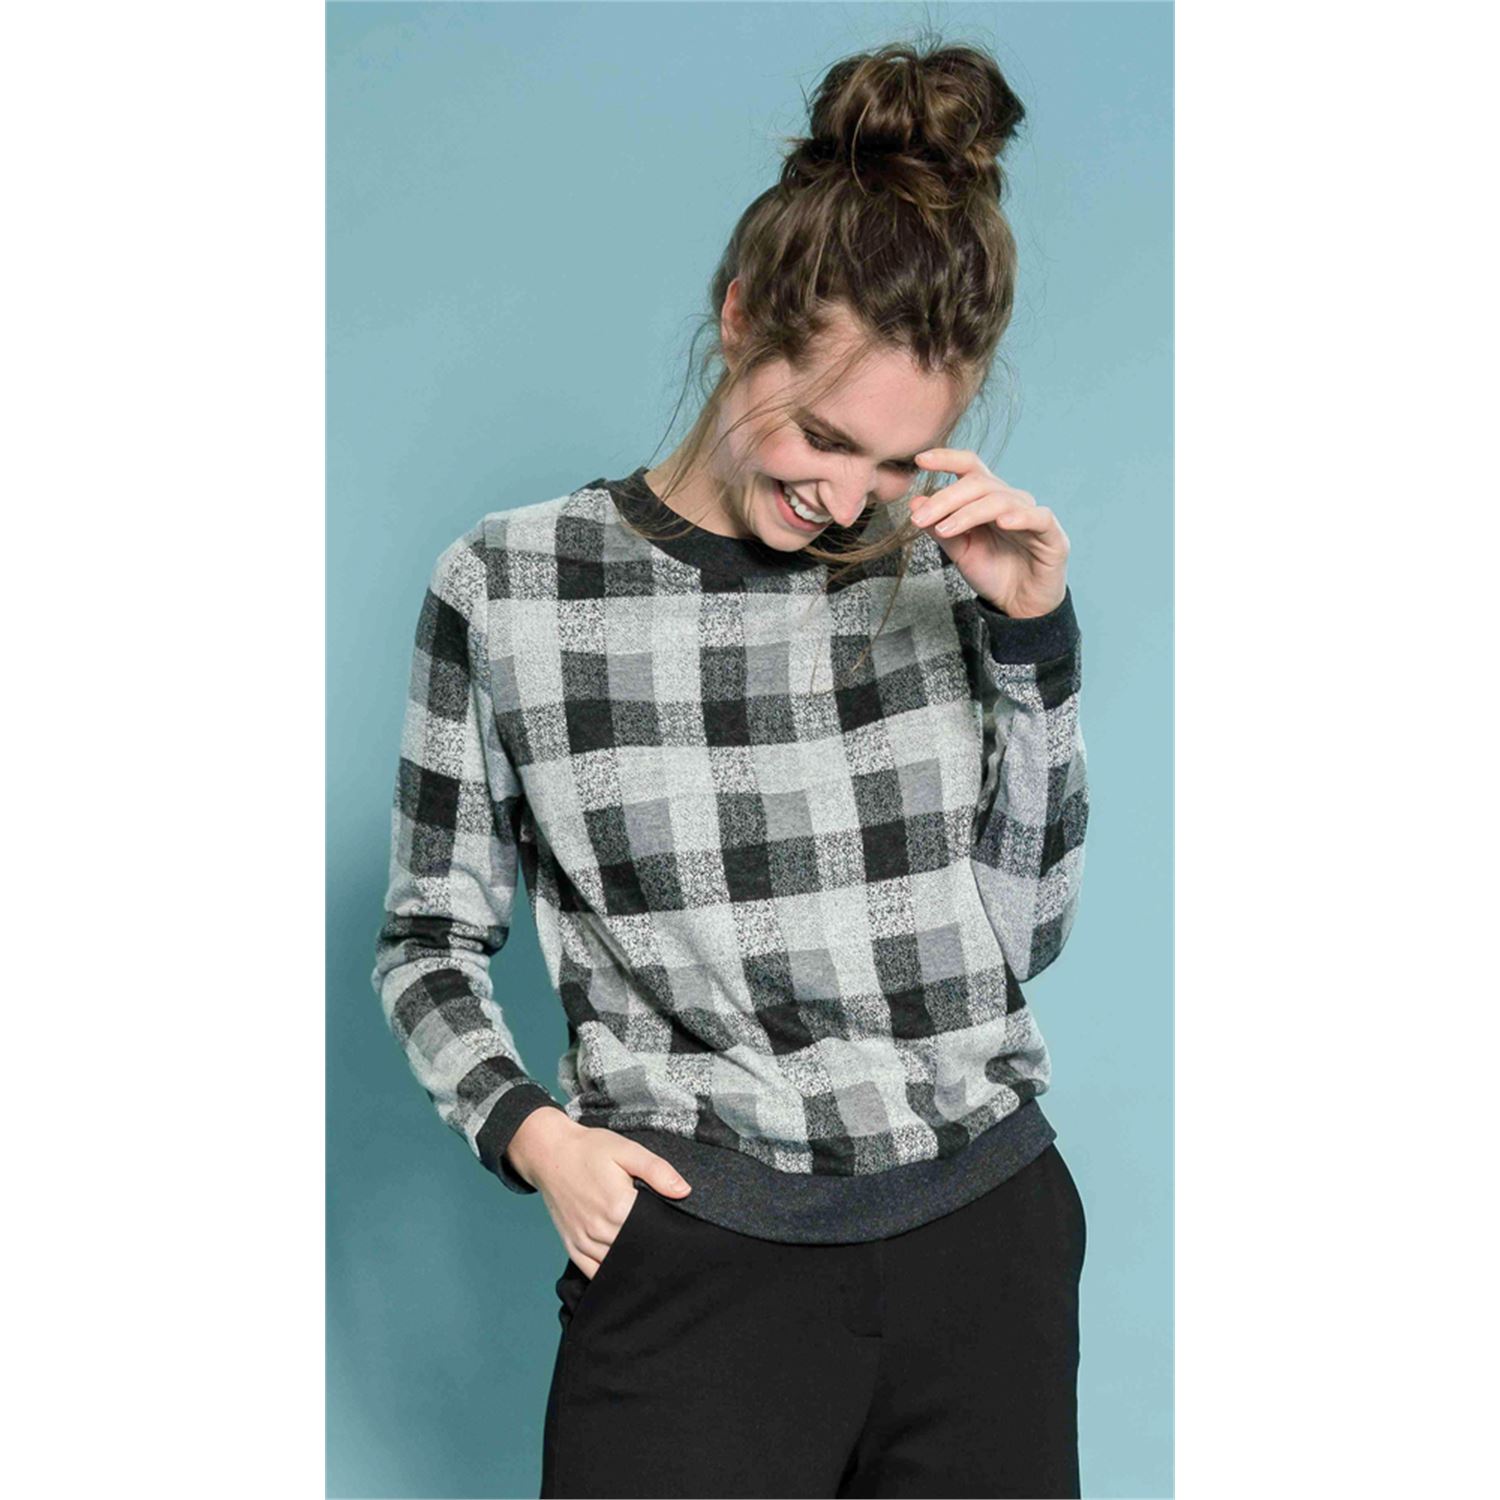 Afvoer Beginner hardware Anotherwoman Ruit sweater - Shop Anotherwoman dameskleding online